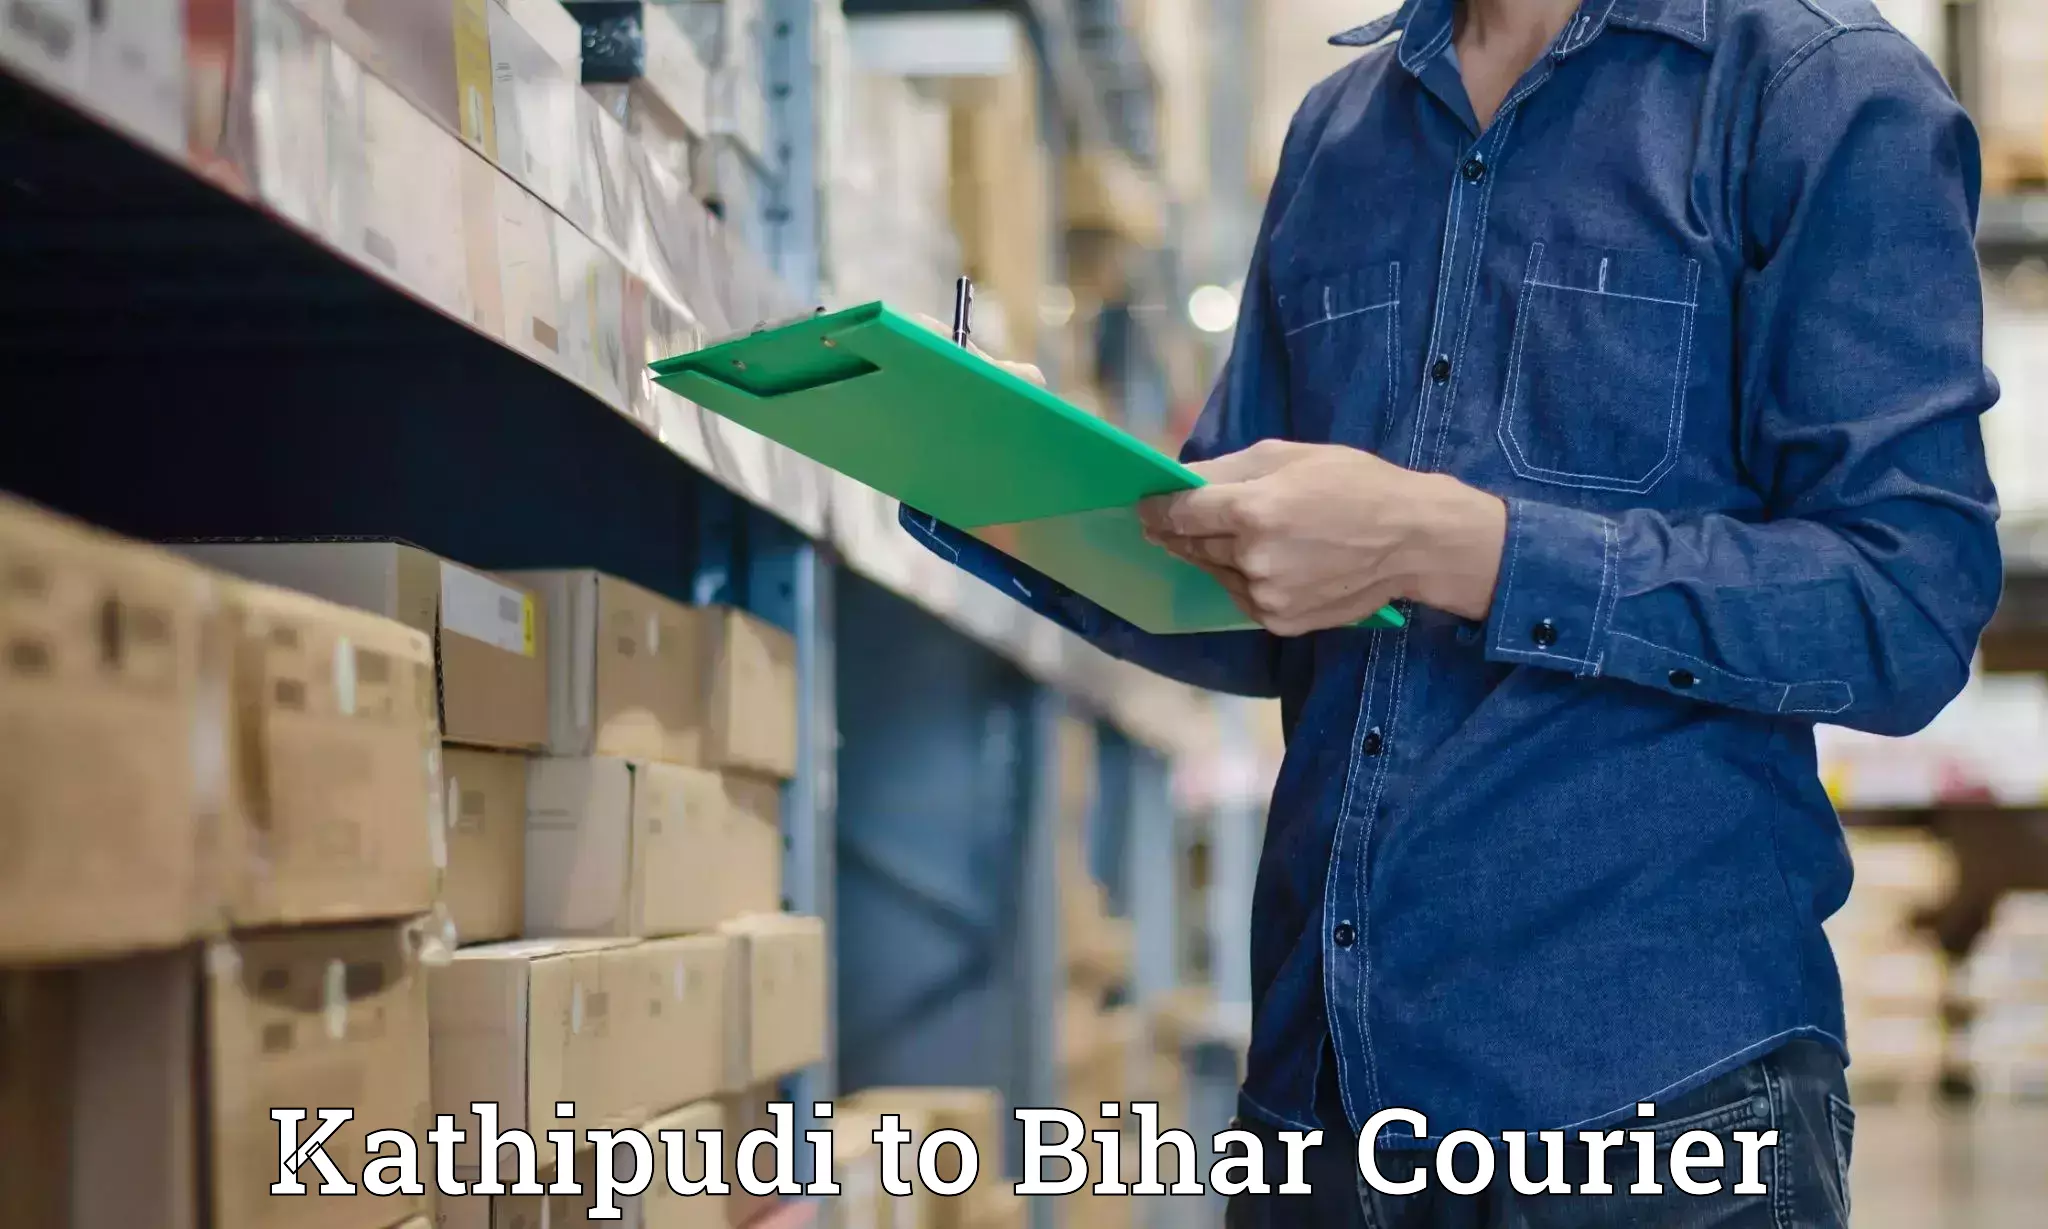 Courier app Kathipudi to Motihari